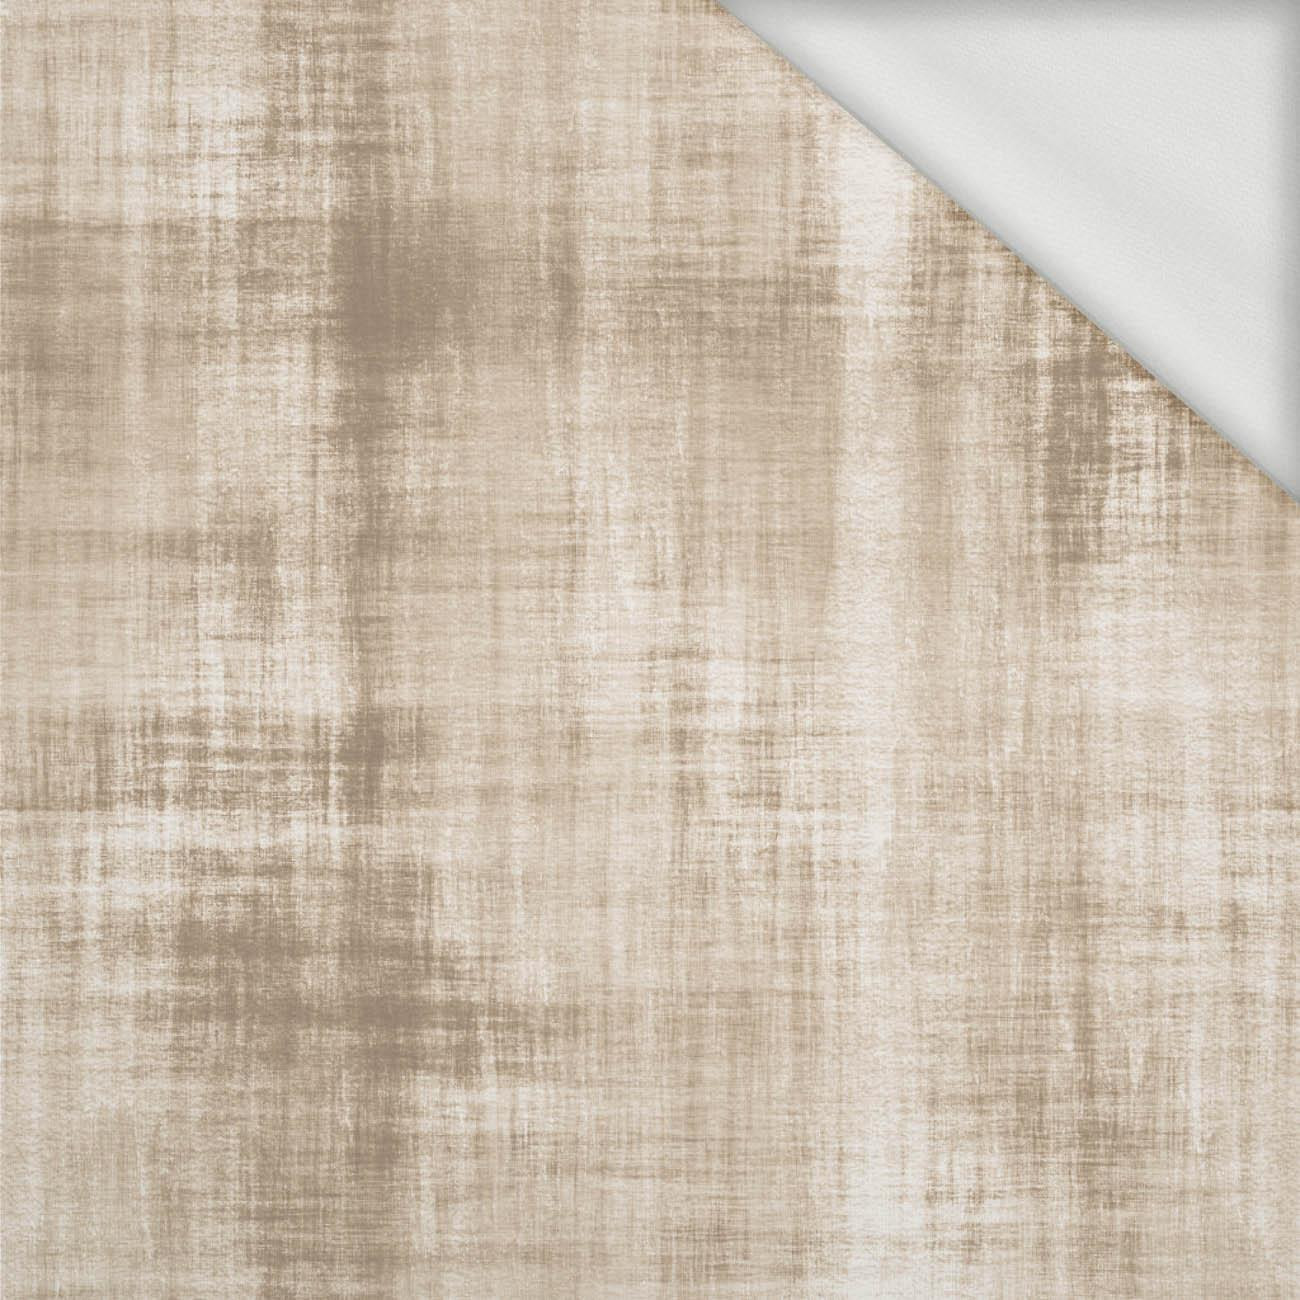 ACID WASH PAT. 2 (beige) - looped knit fabric